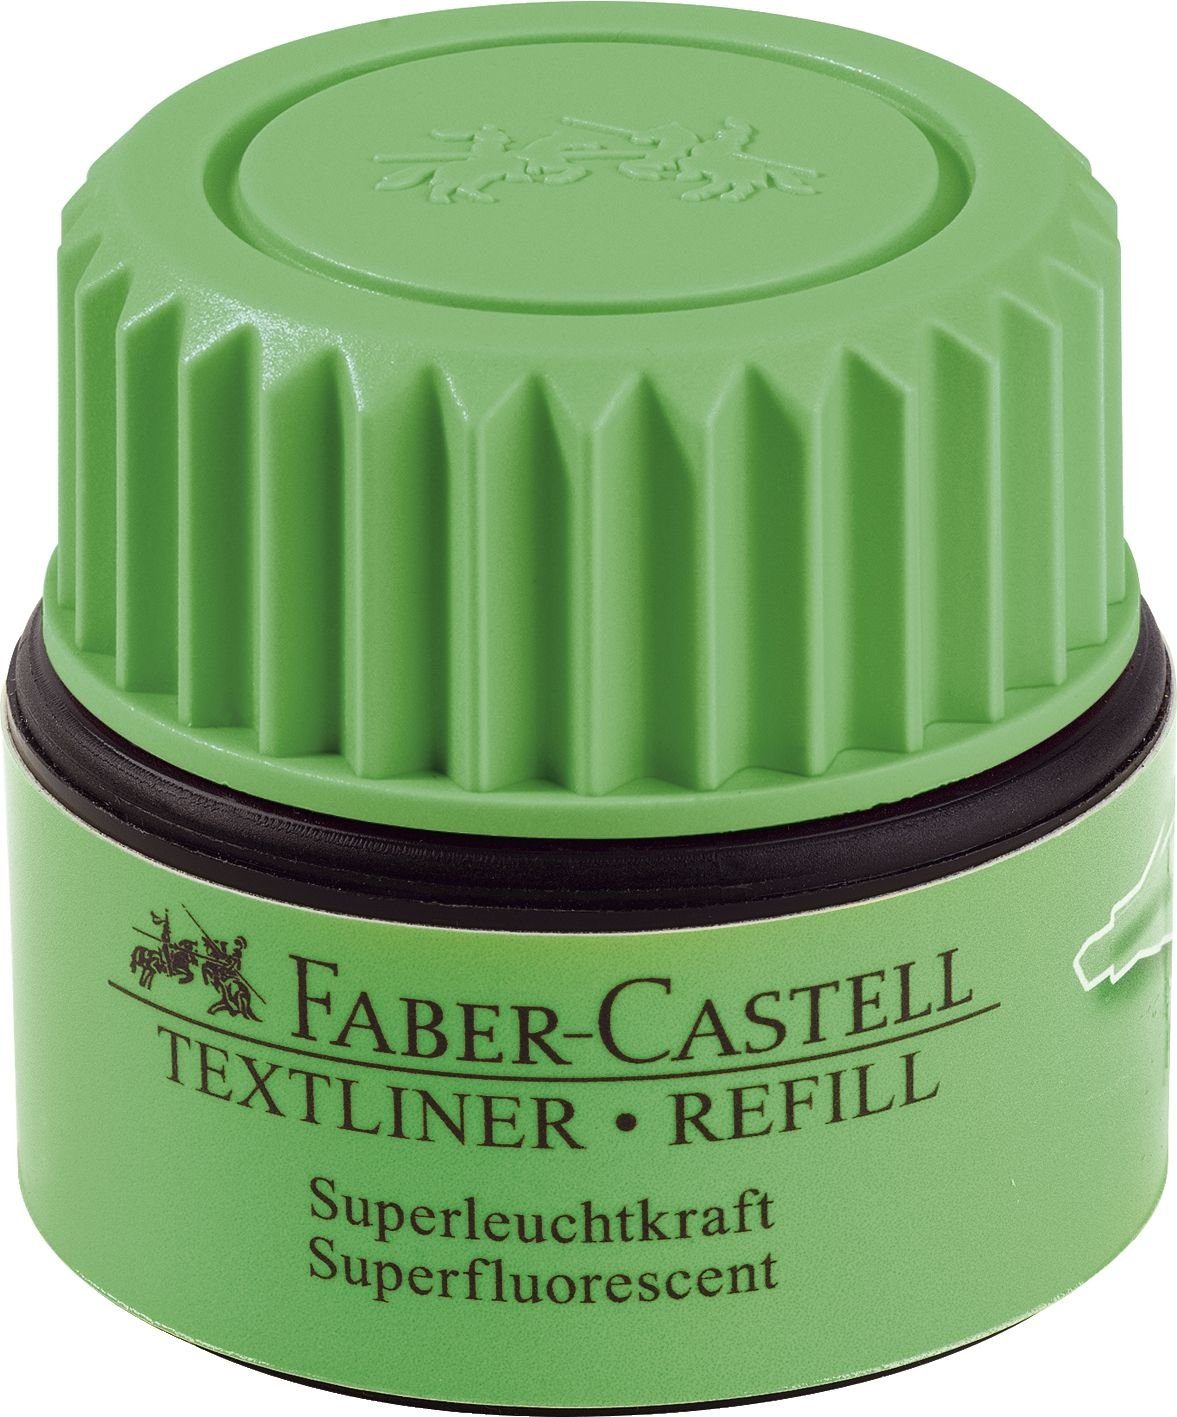 Handscanner Faber-Castell Nachfüll-Station leuchtgrün FABER-CASTELL TEXTLINER 1549,